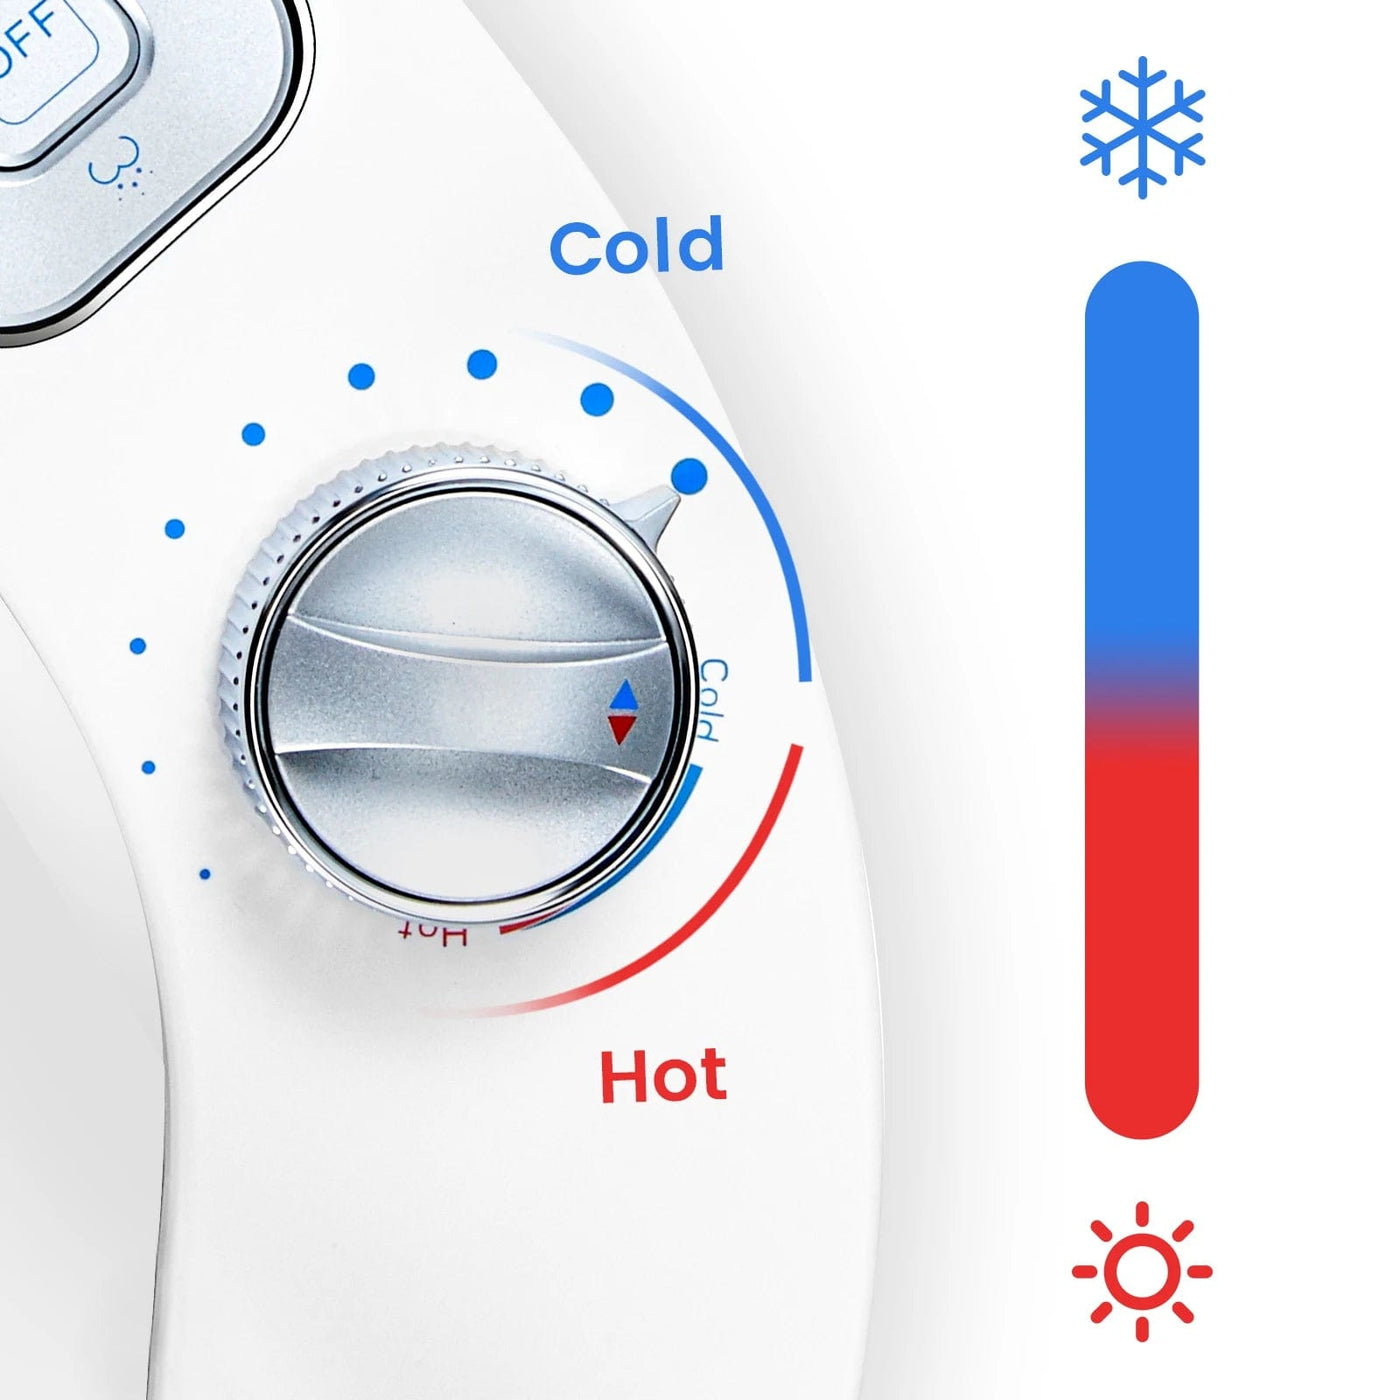 Samodra™ | Premium Hot & Cold Bidet| Front & Rear Wash - EVERRD USA